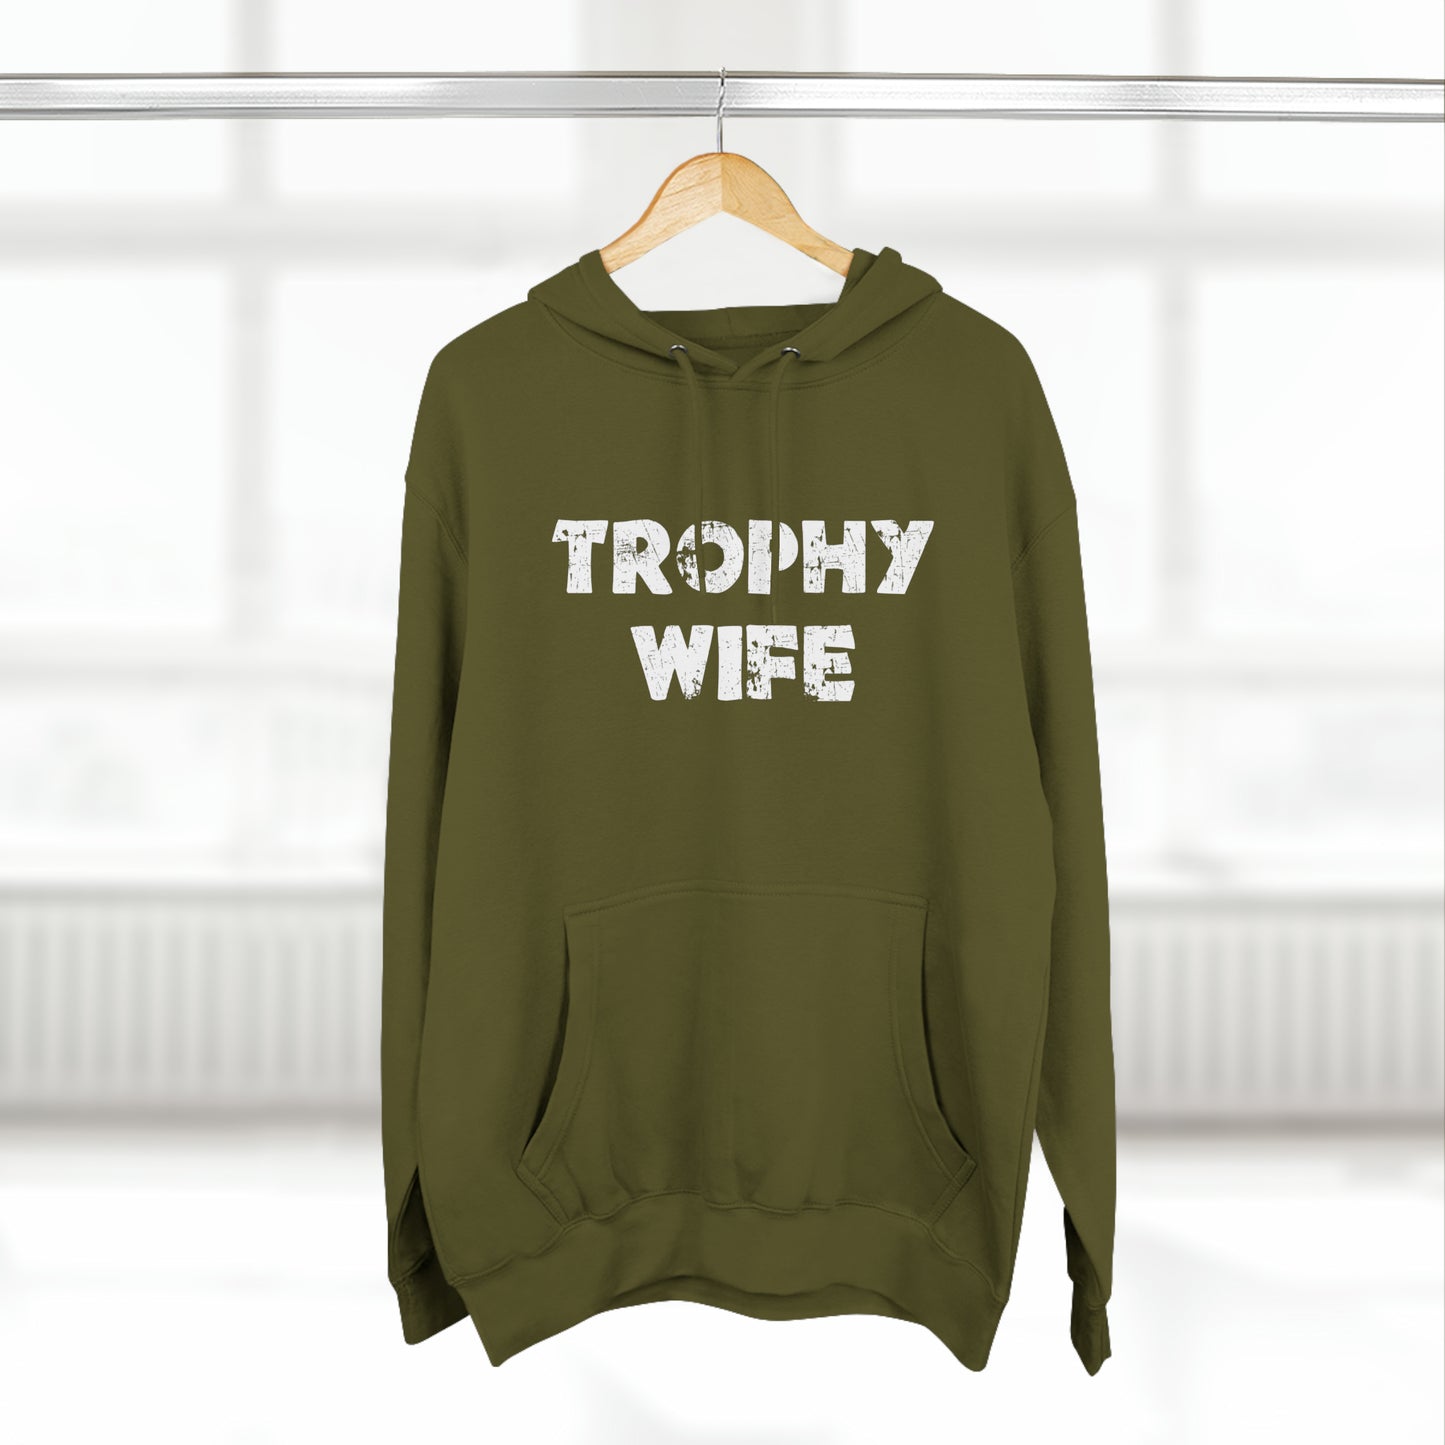 Trophy Wife Hoodie in army green